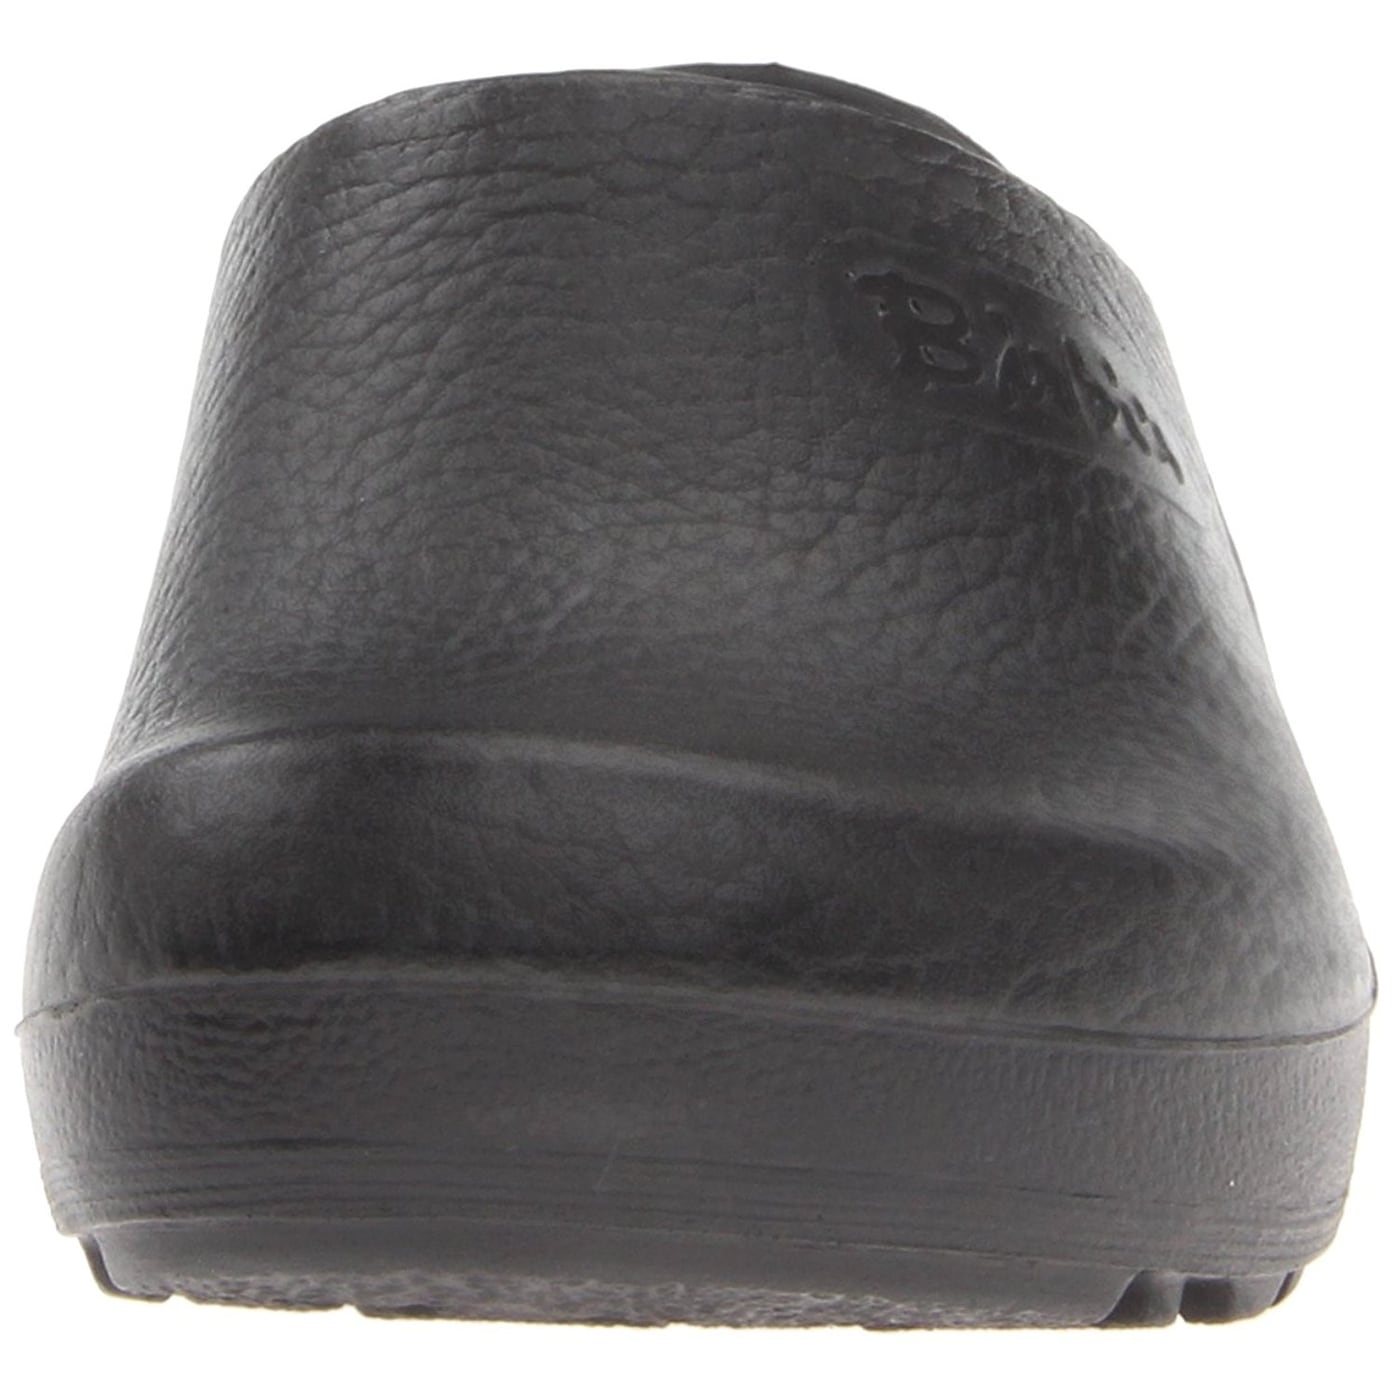 birkenstock professional unisex profi birki slip resistant work shoe